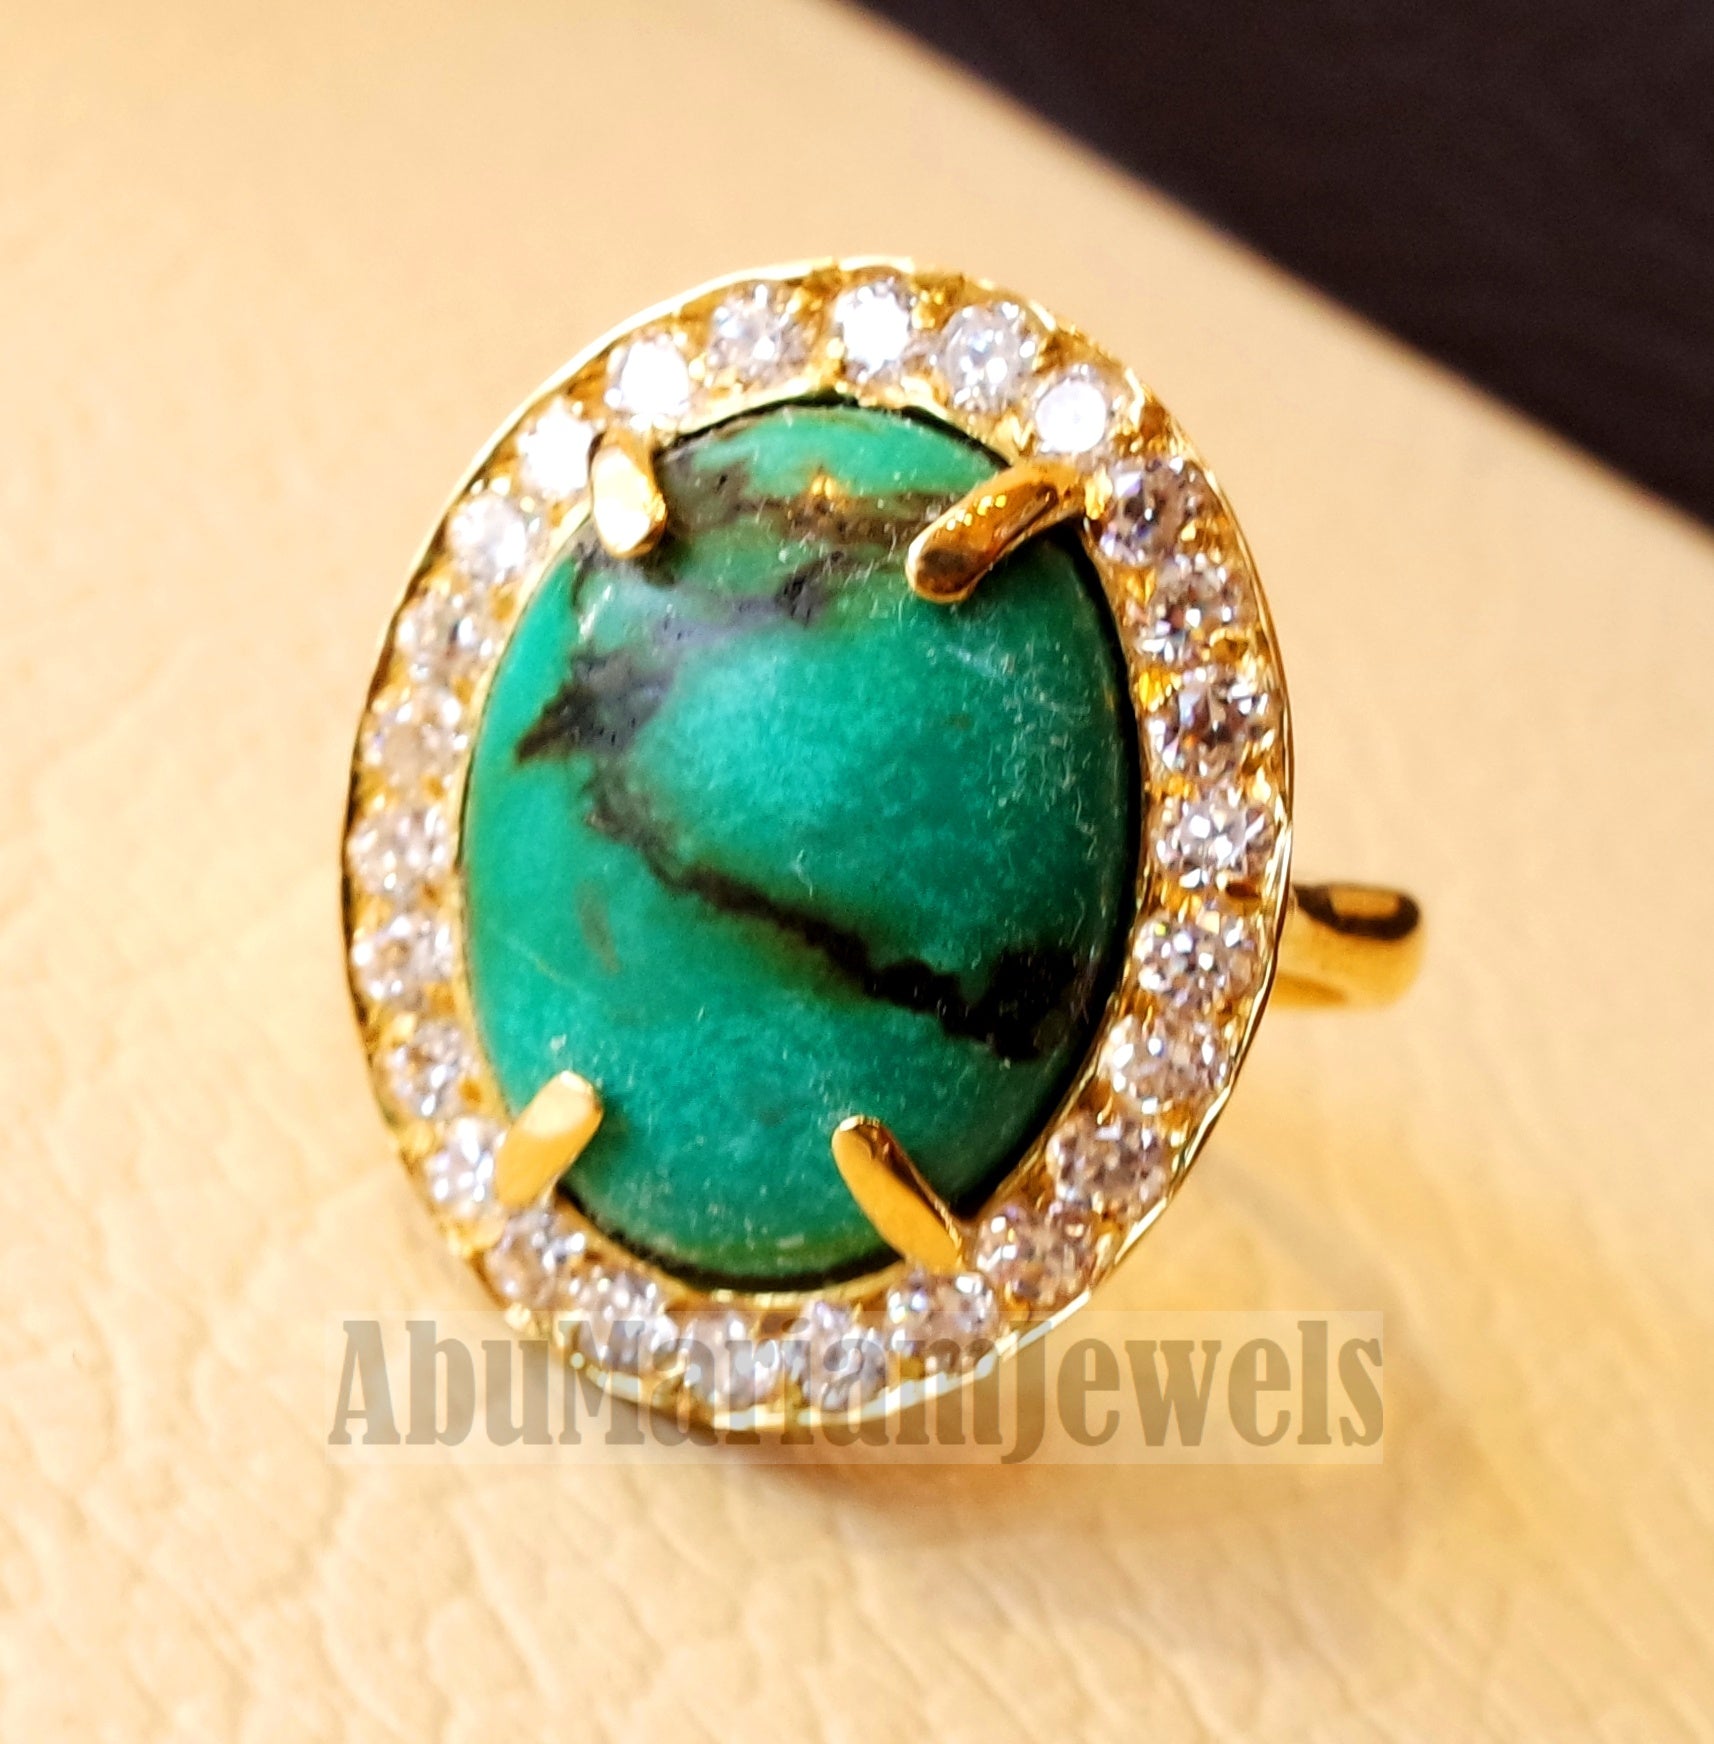 Solitaire Silver Ladies Ring 408 CZ Stone AlitJewellery | ALIT Jewellery